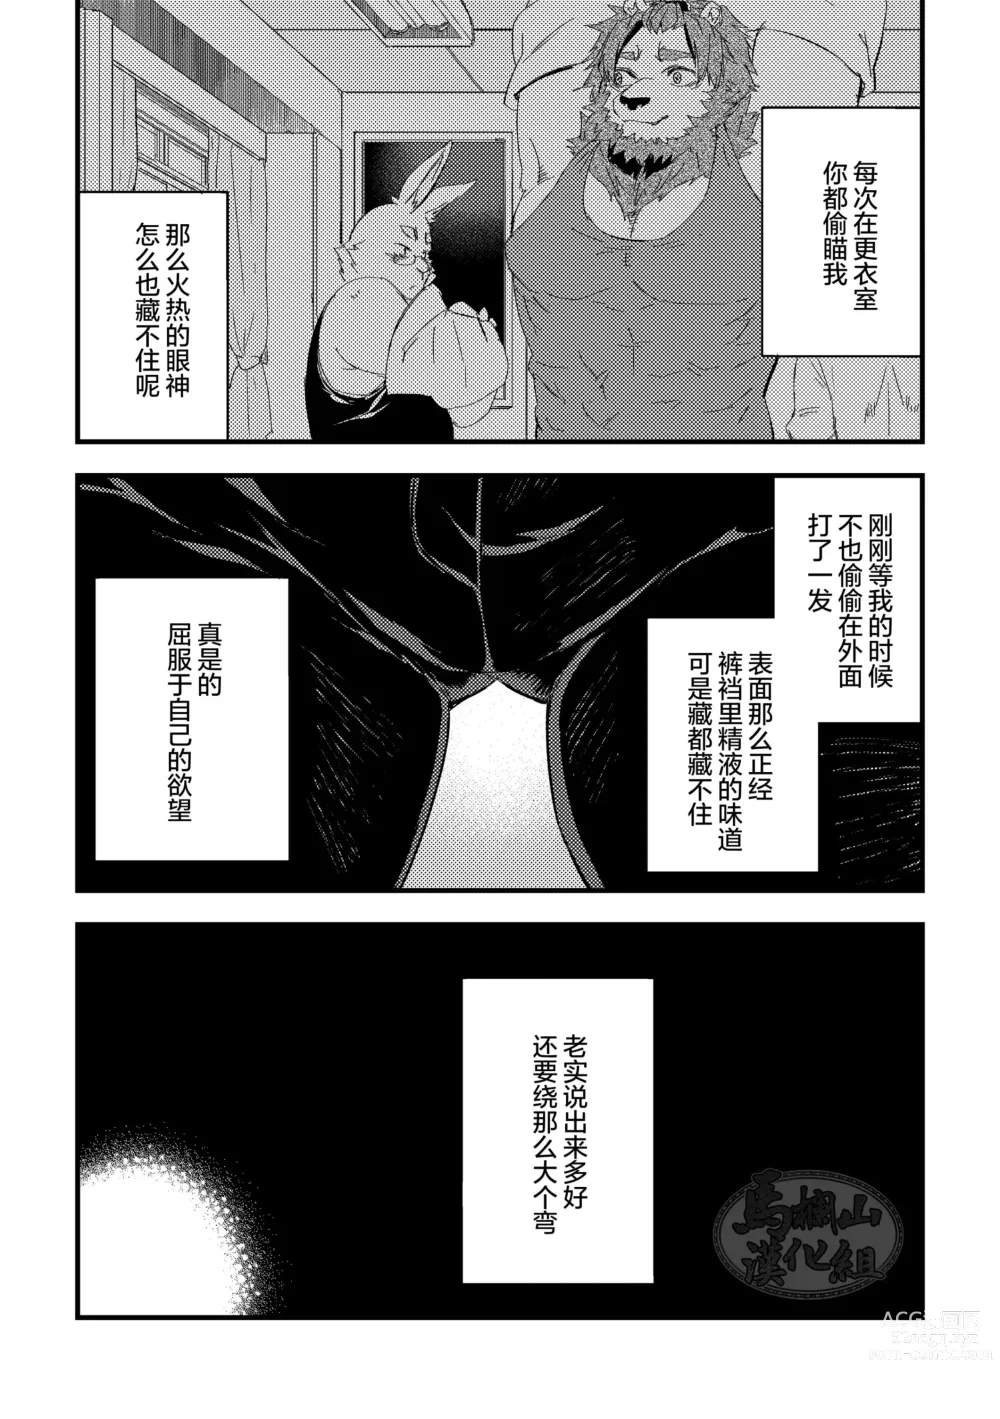 Page 13 of manga 獅子は兎を狩るのにも